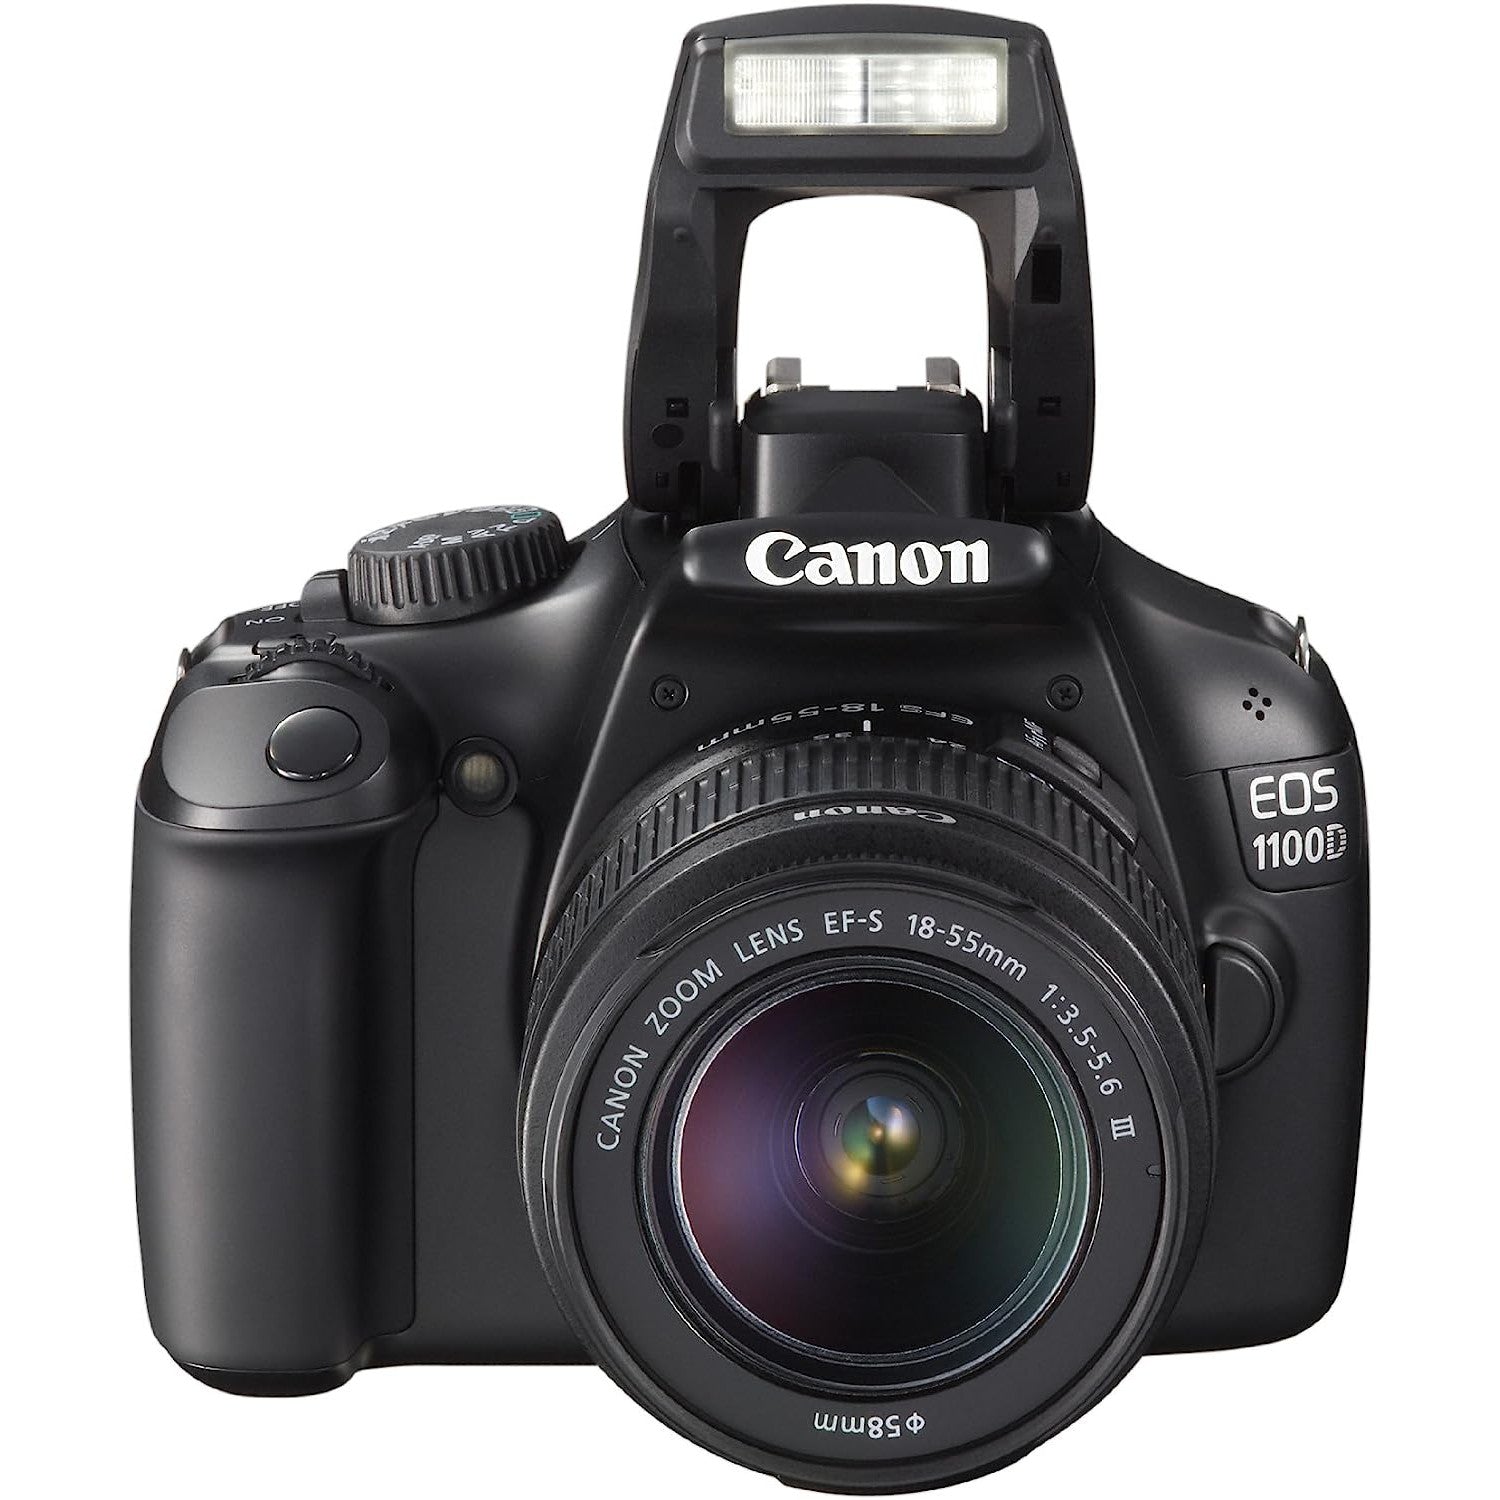 Canon EOS 1100D Digital SLR Camera - Black